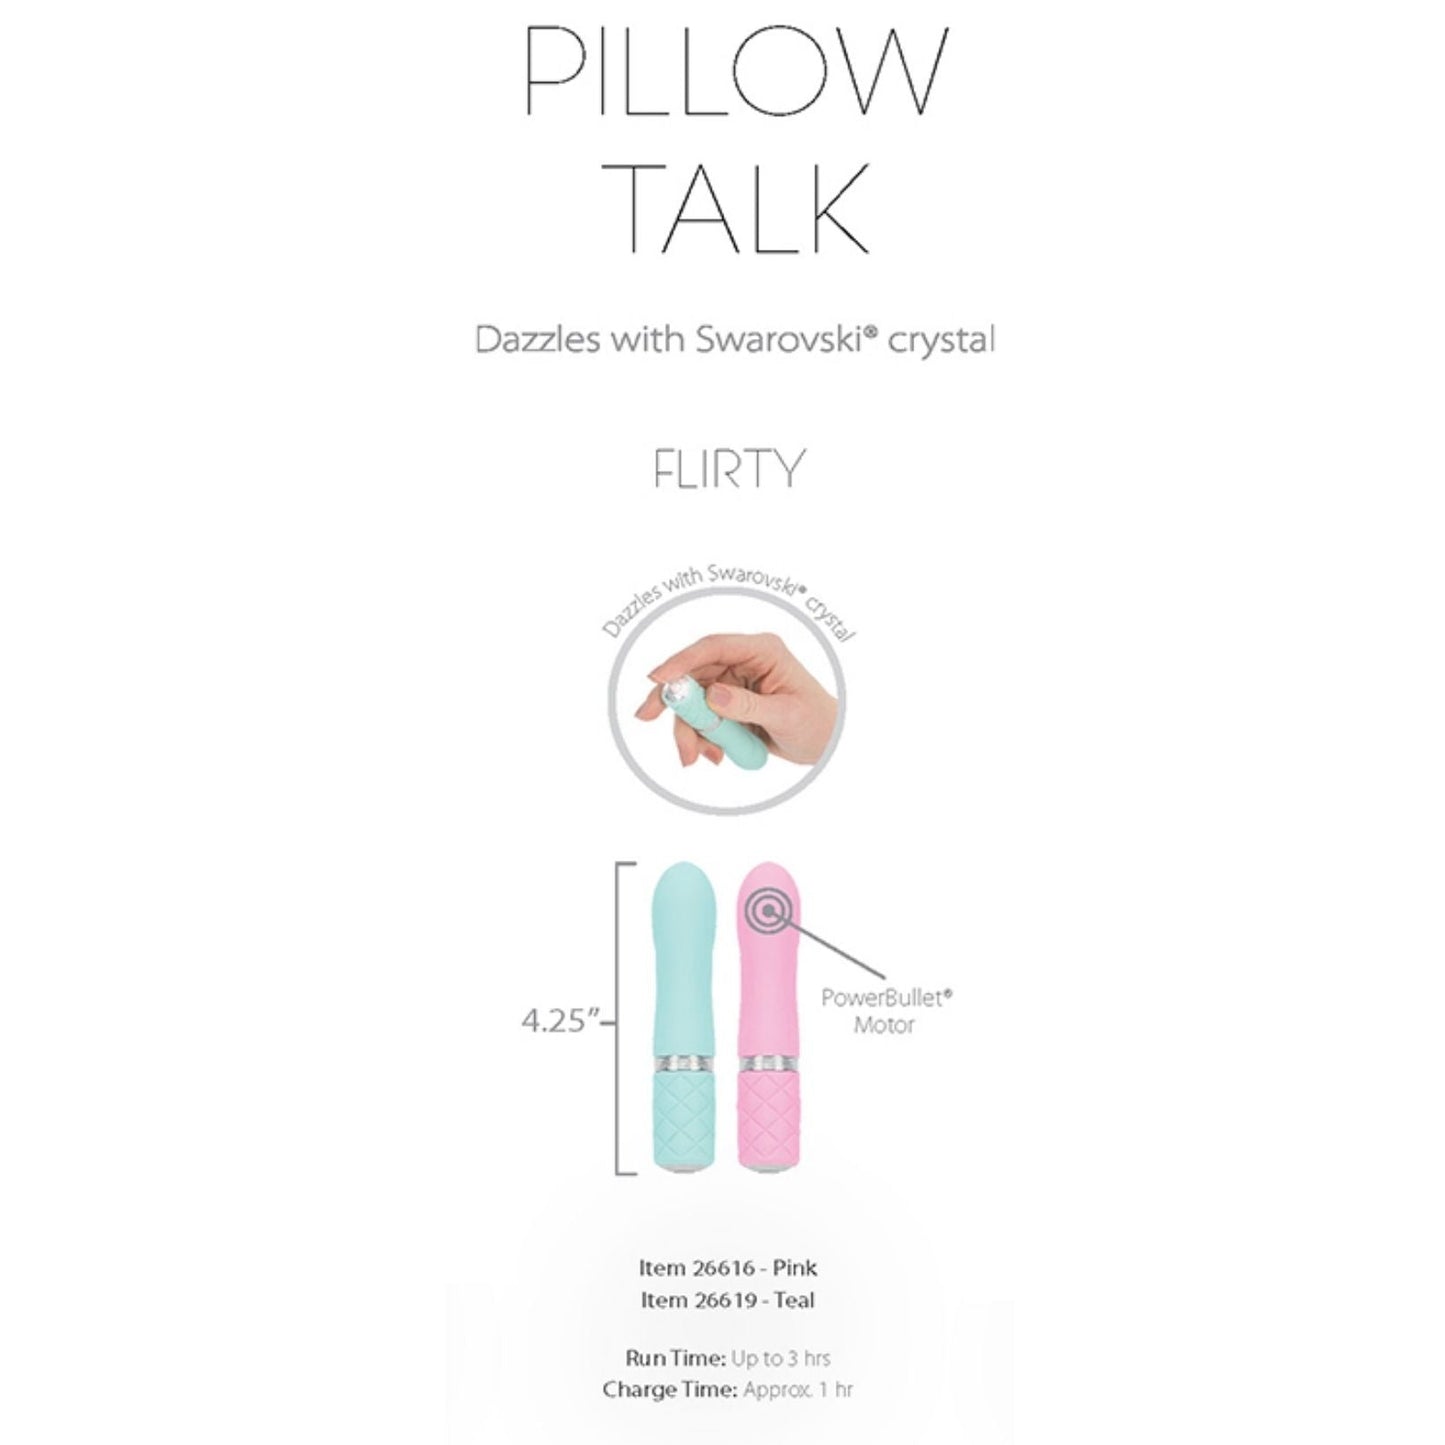 Flirty Mini Massager - Pillow Talk